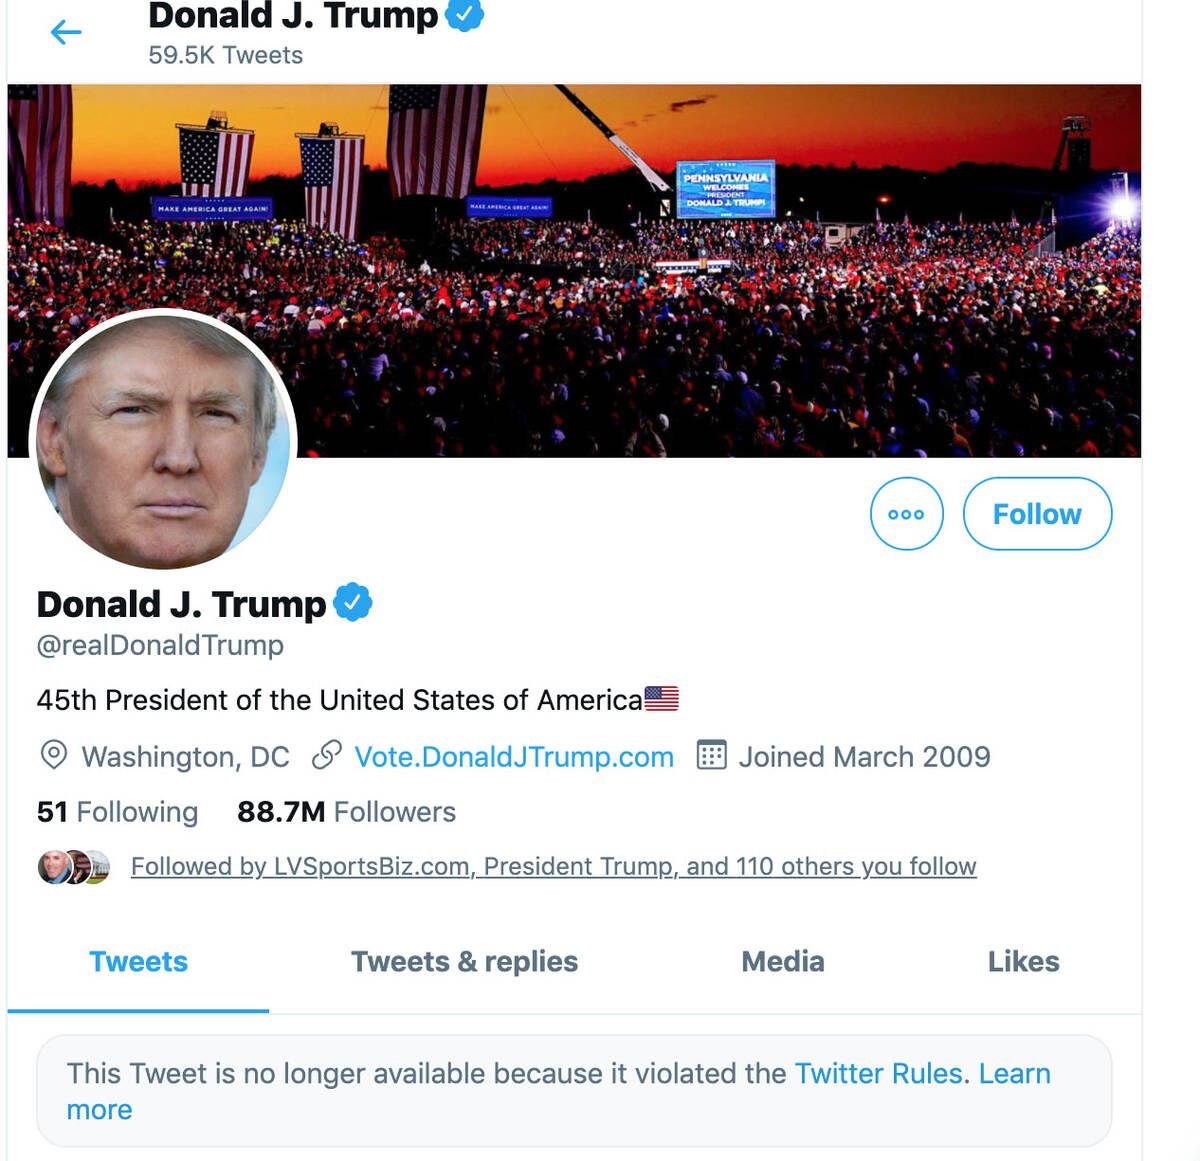 President Donald Trump's Twitter site is seen in 2020. (Twitter)